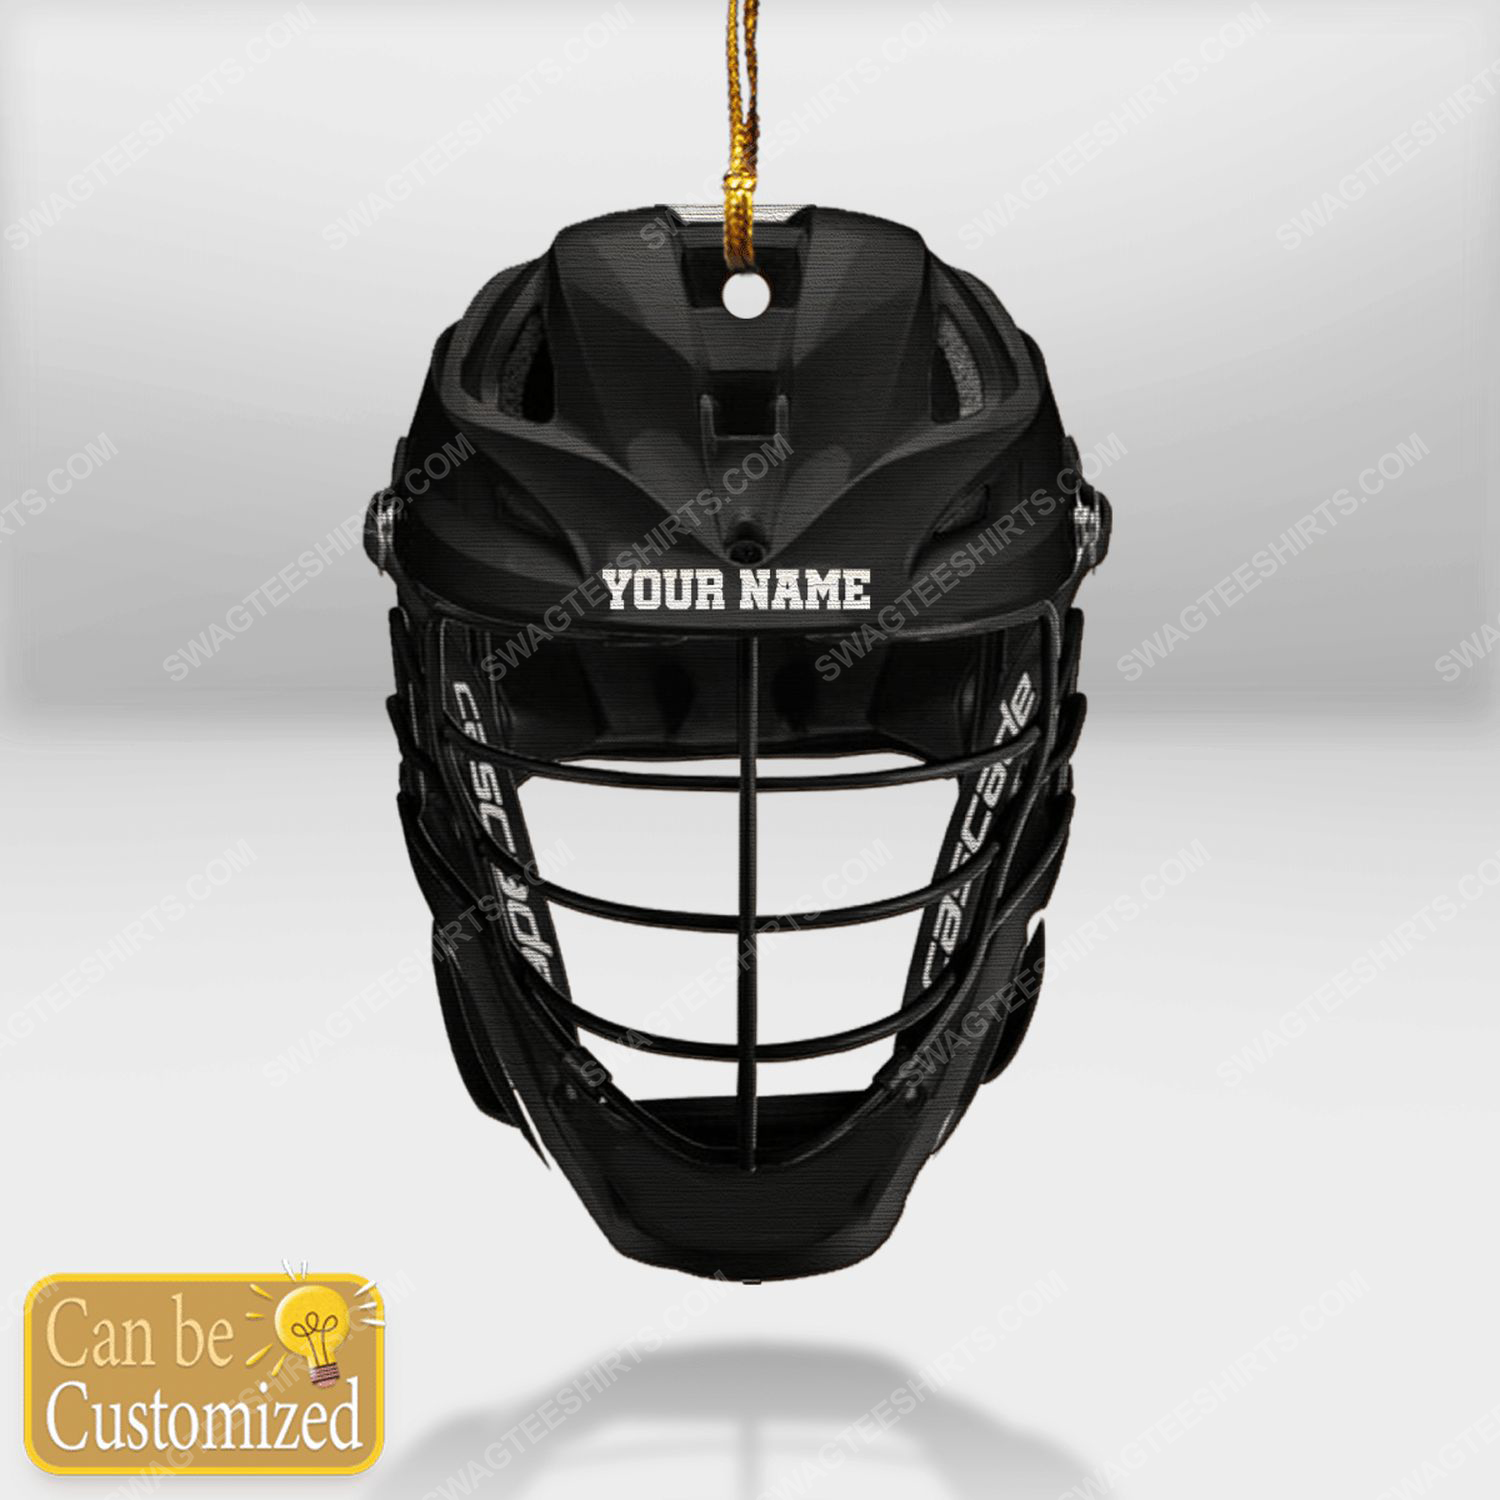 Custom lacrosse helmet black mask christmas gift ornament 1 - Copy (2)